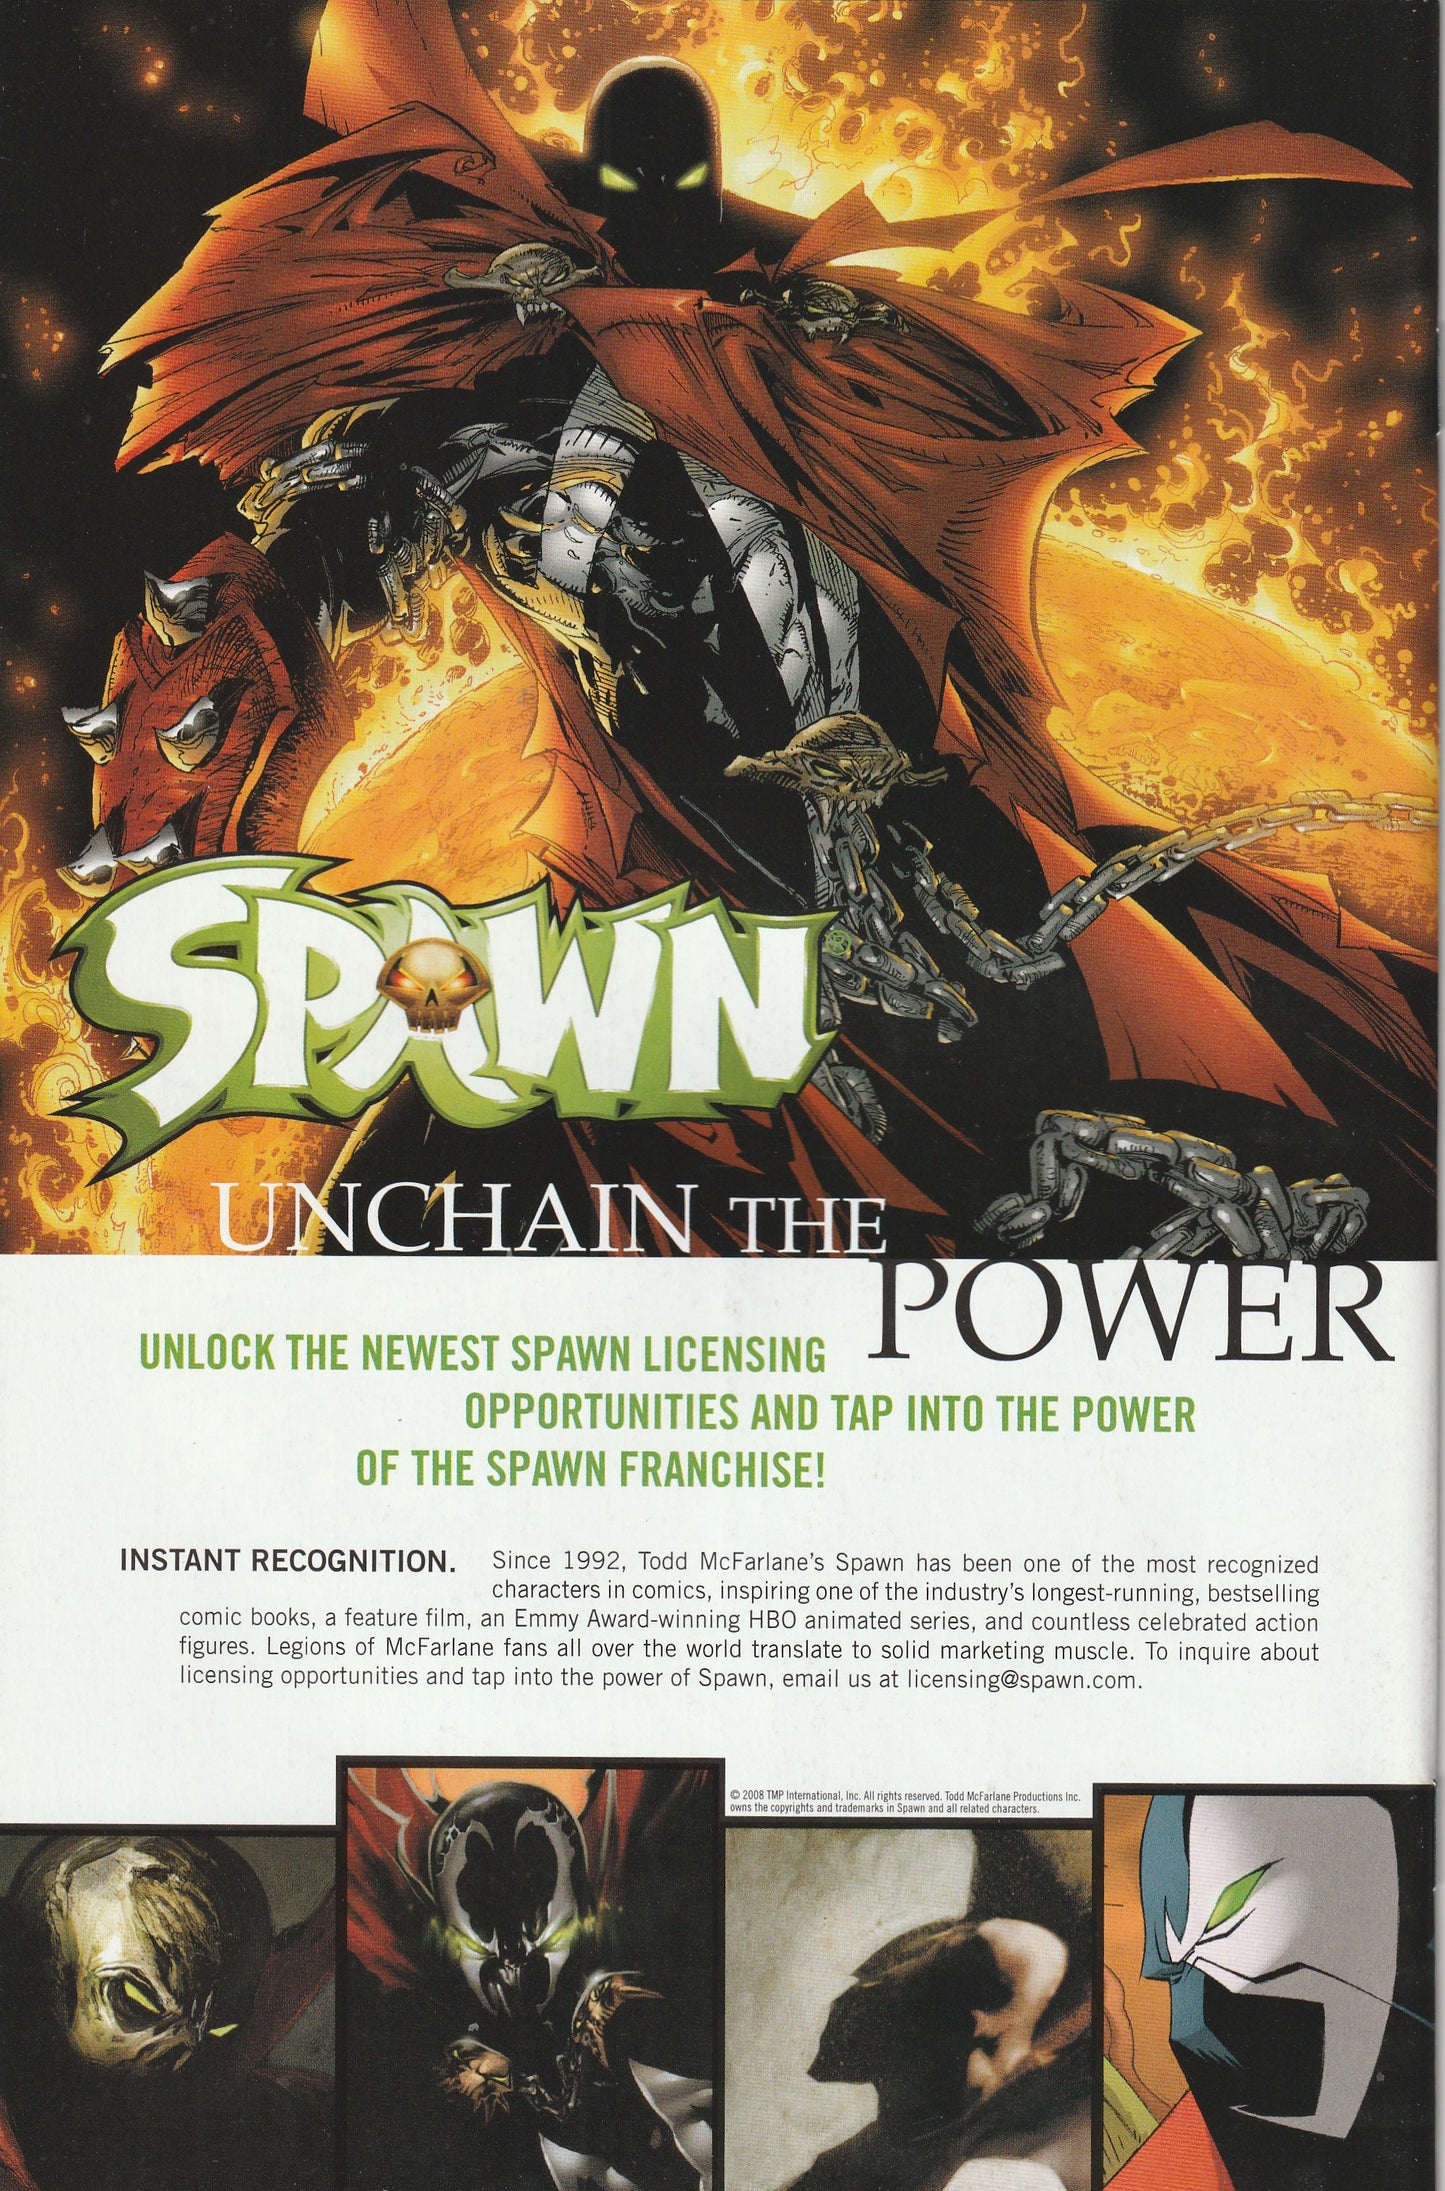 Spawn #190 (2009) - Capullo & McFarlane cover art